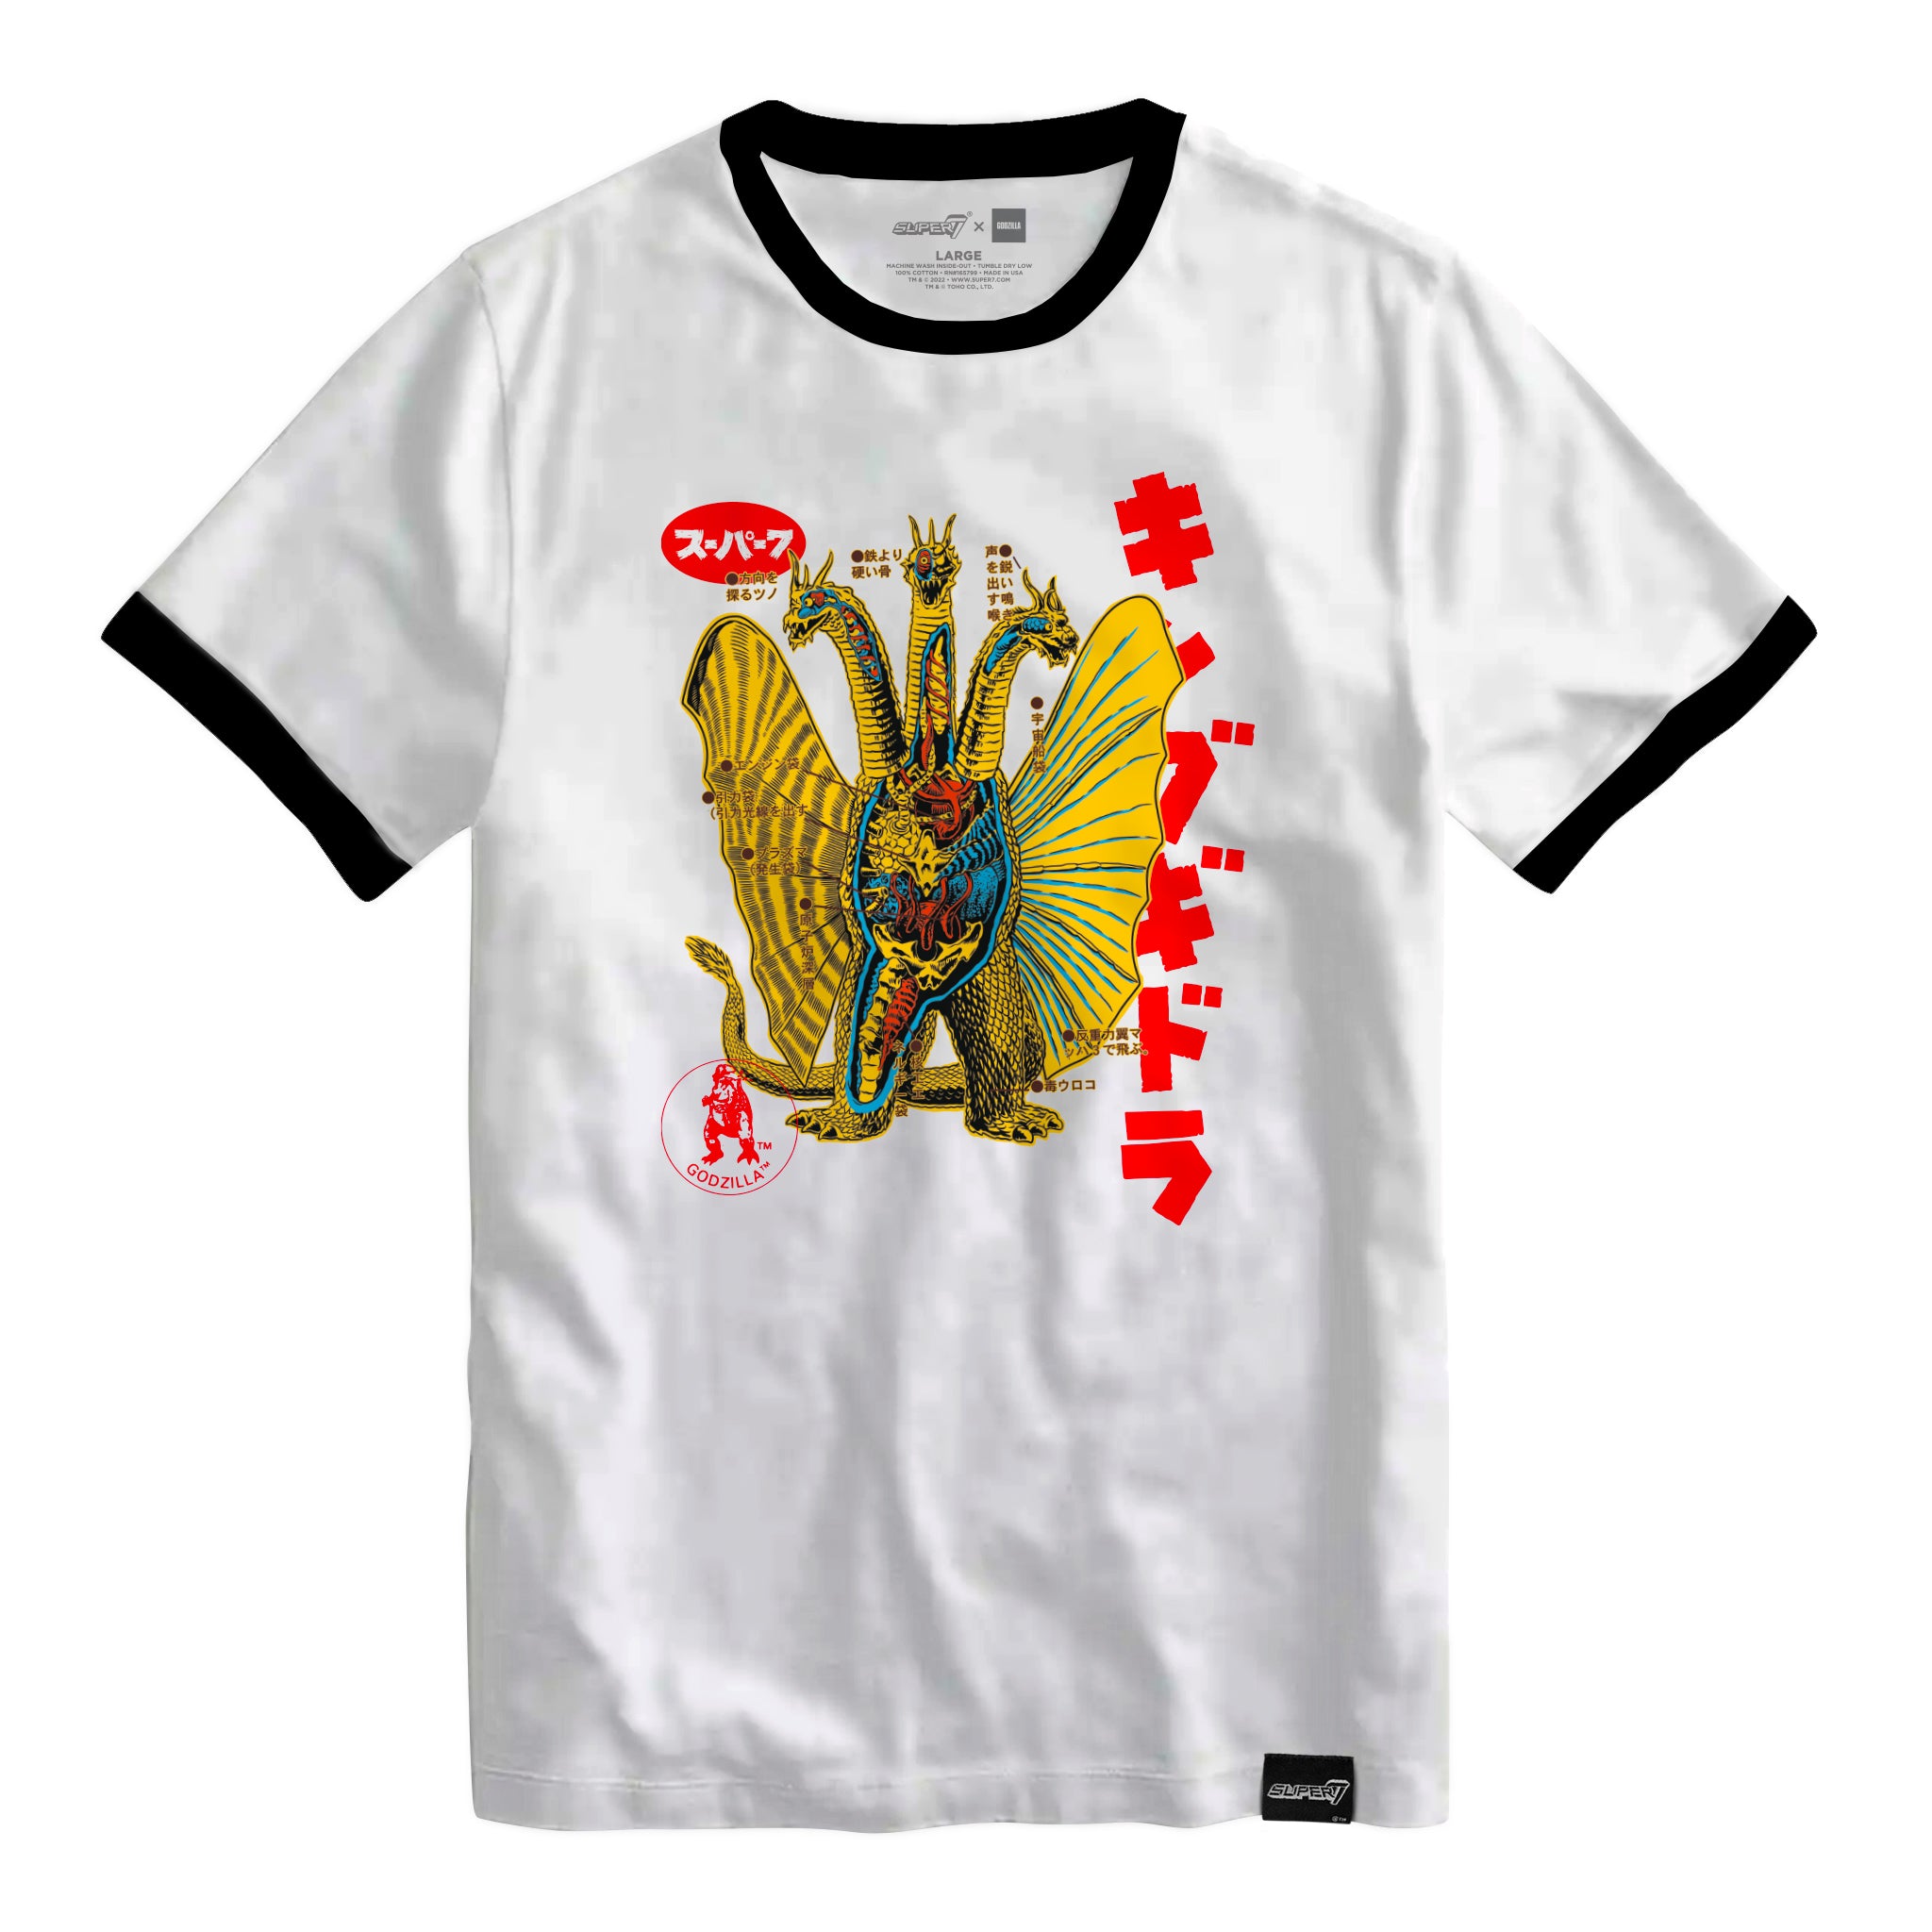 Toho T-Shirt - Anatomical King Ghidorah Ringer